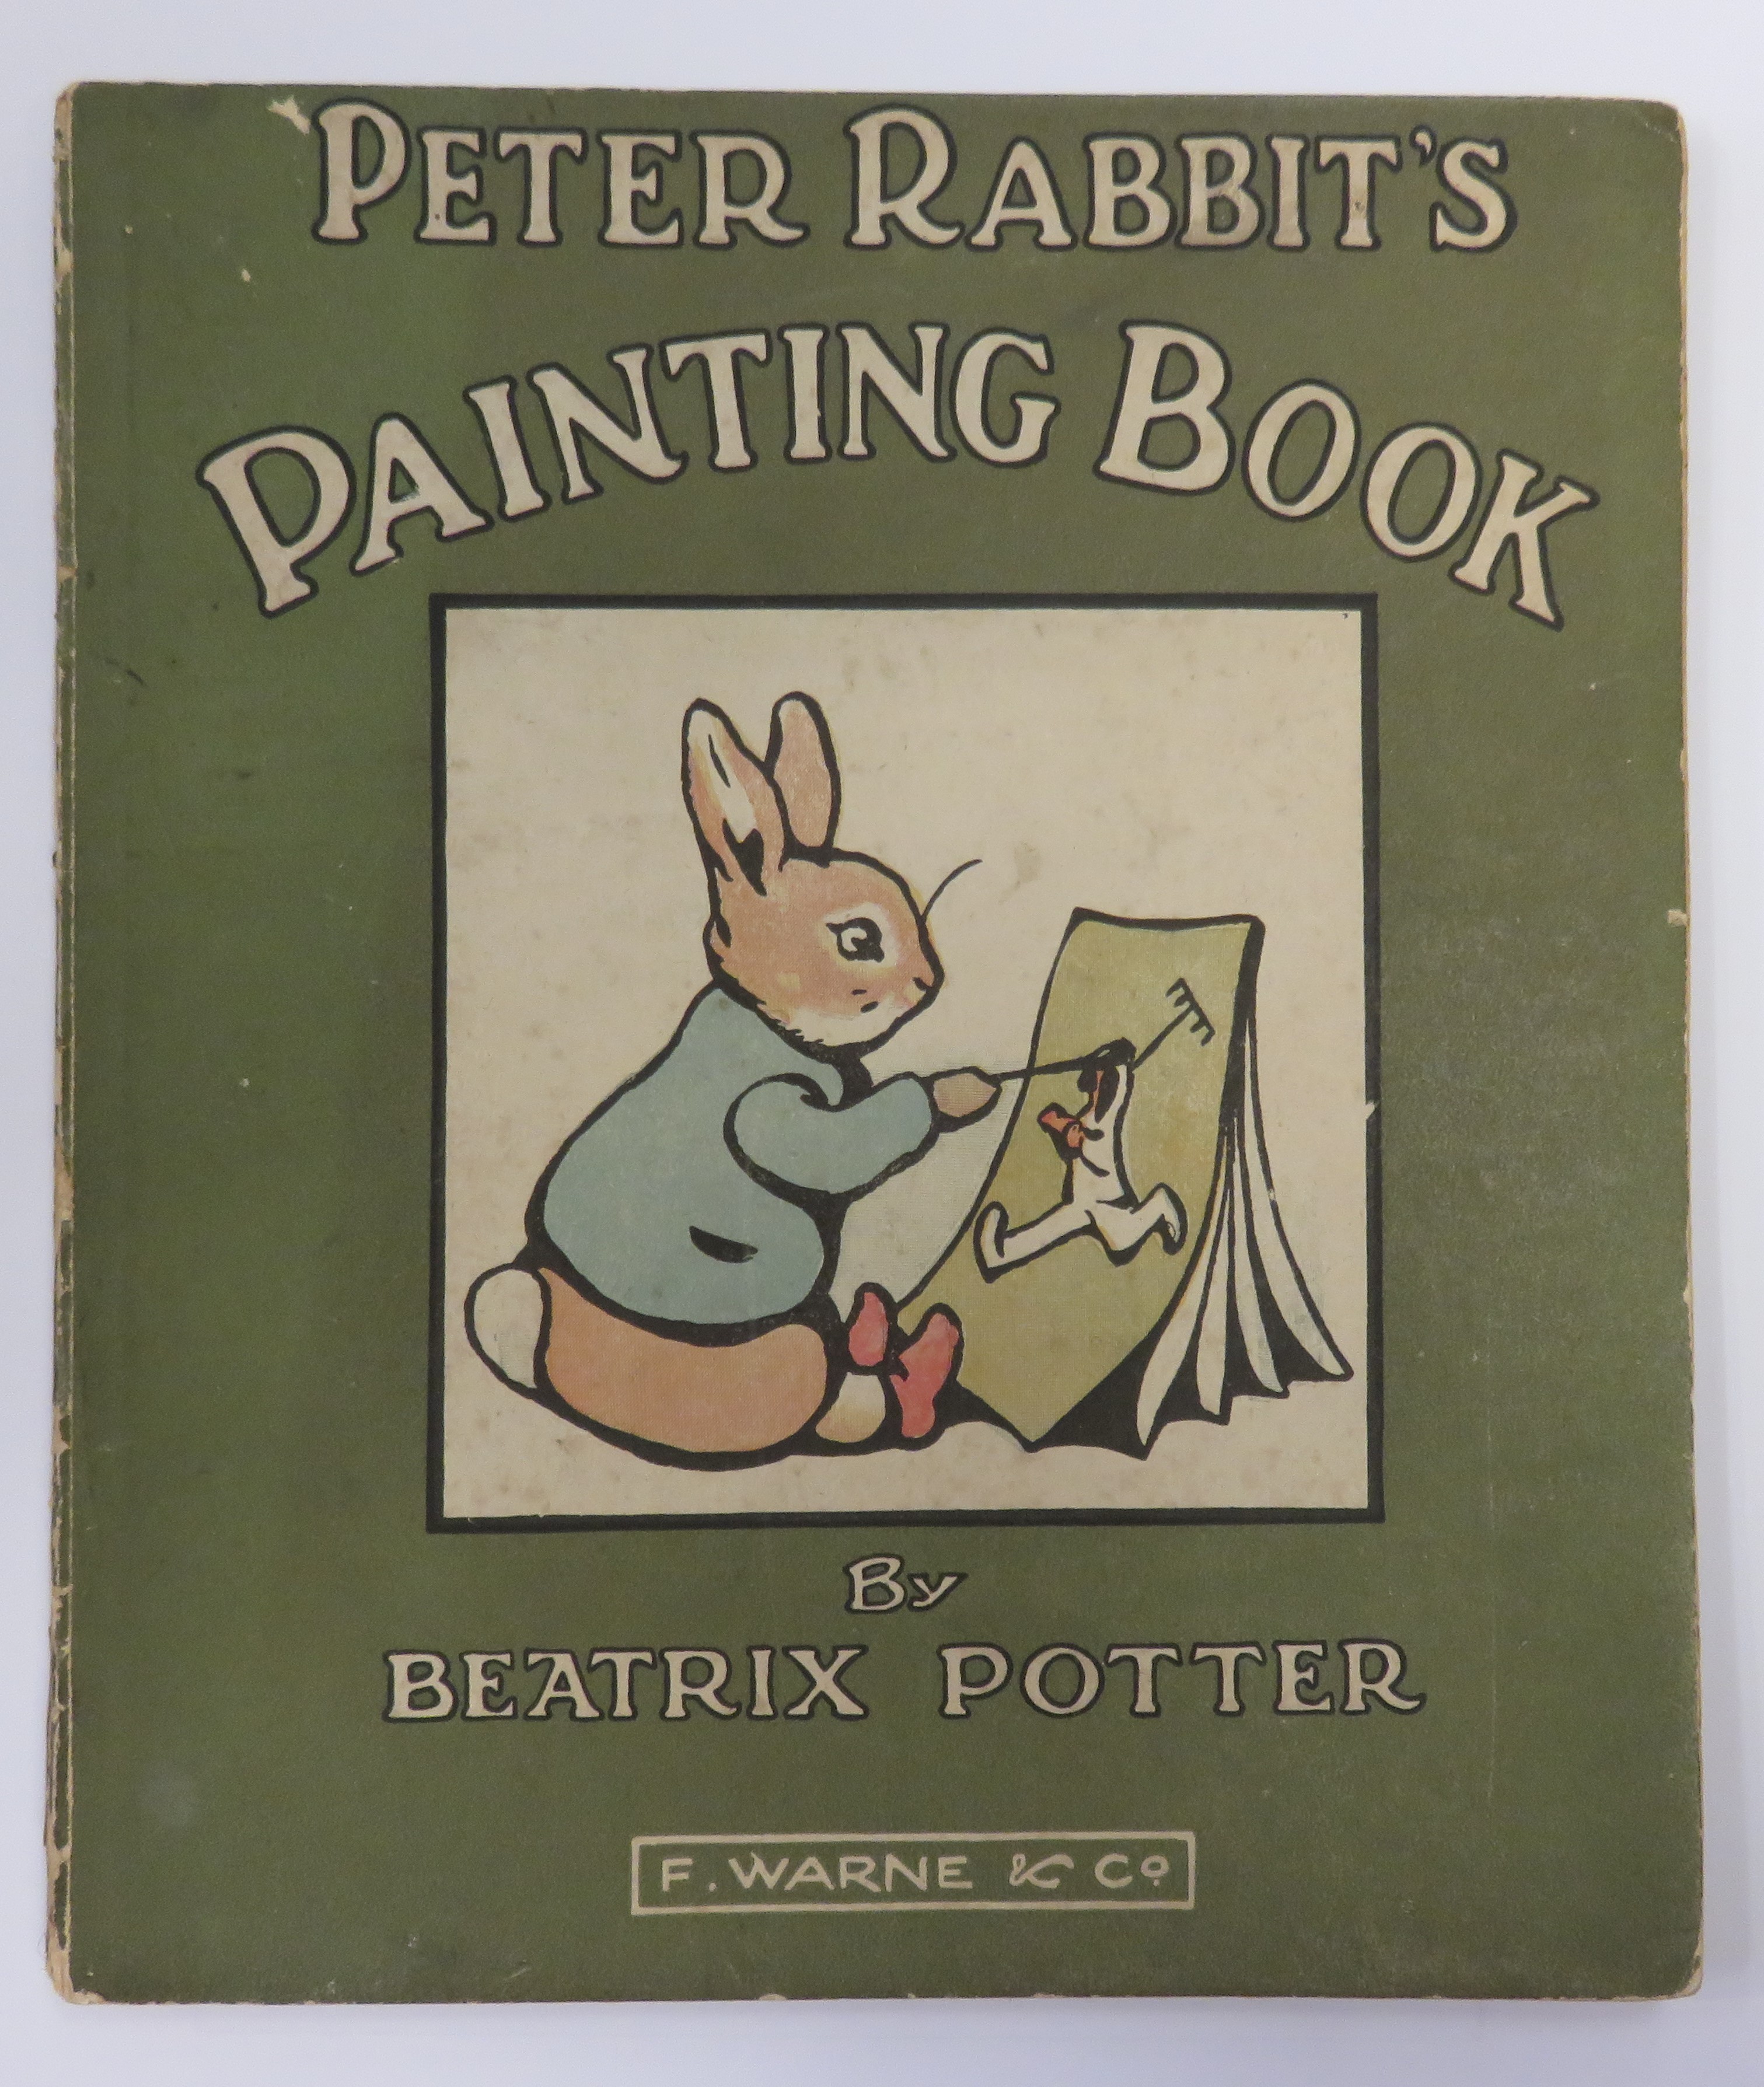 Peter Rabbit's Painting Book